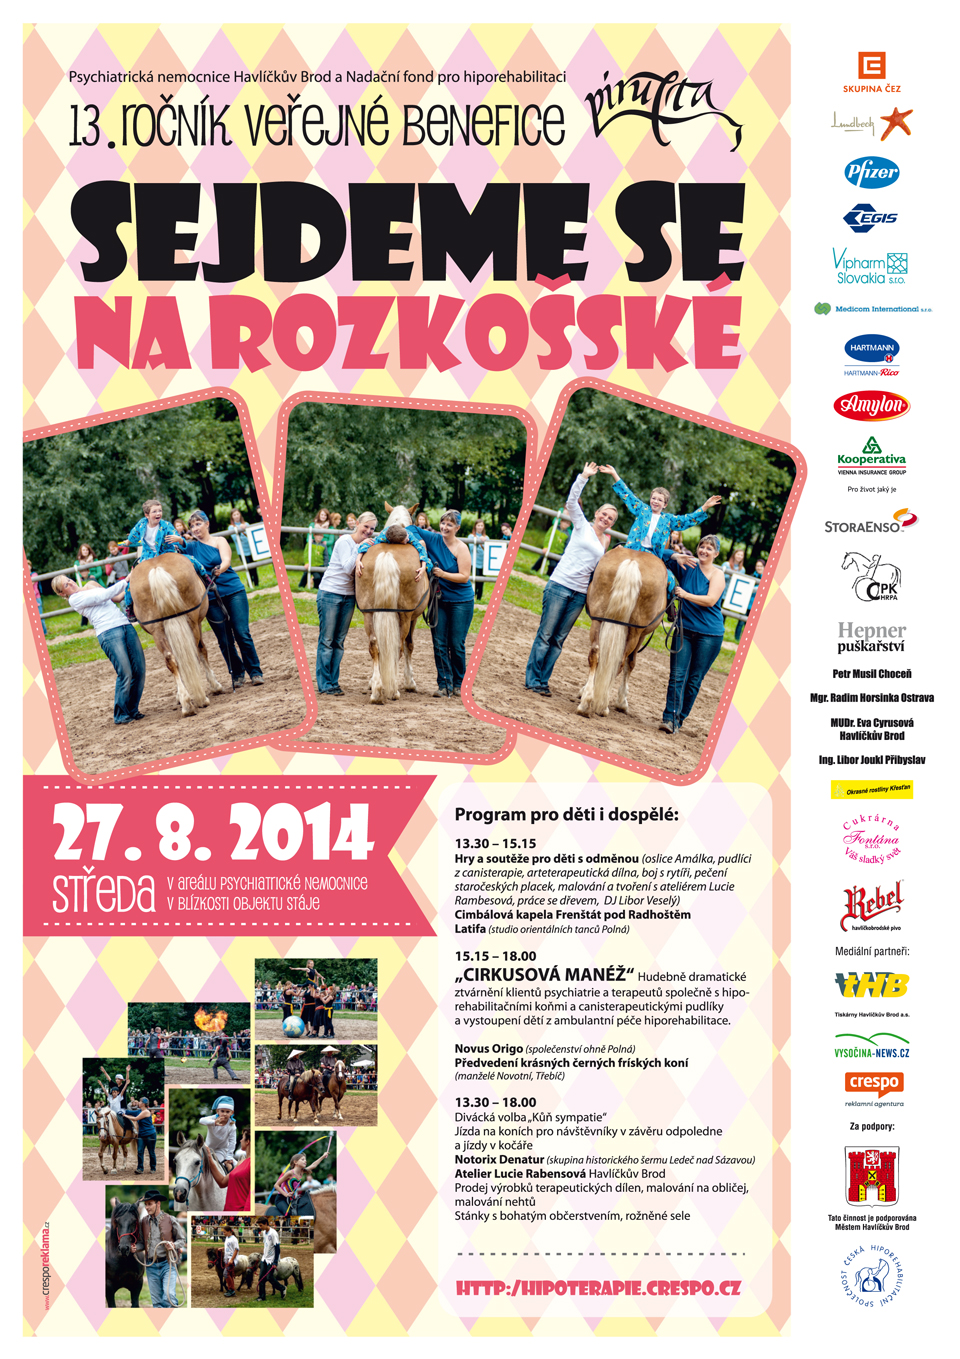 Benefice 2014 - Sejdeme se na Rozskosk